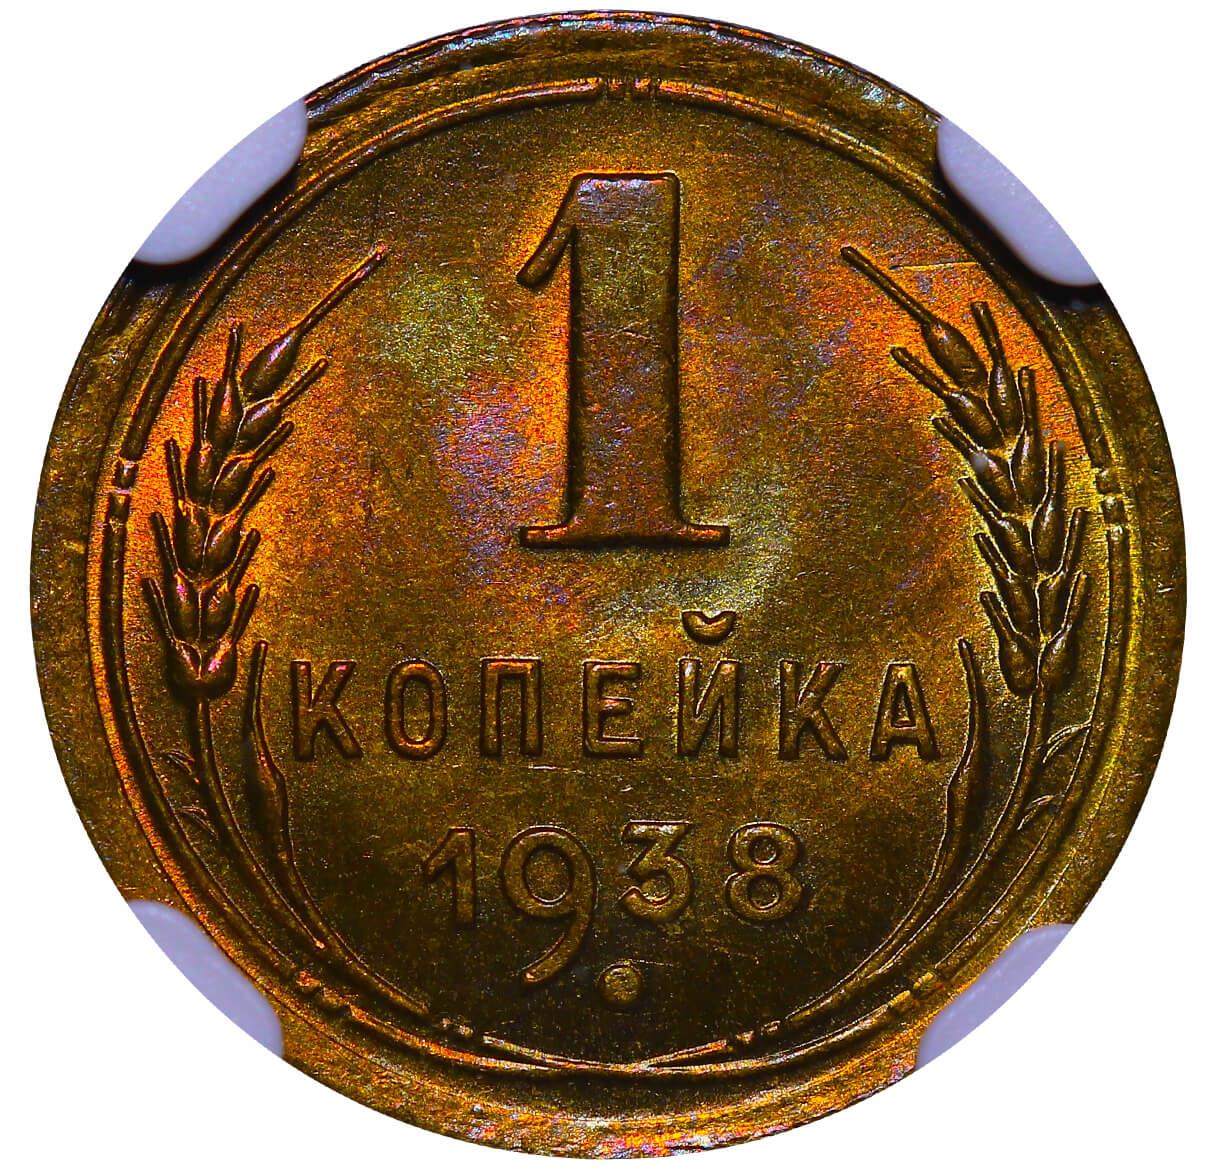 Soviet Union, 1 Kopeck, 1938 year, NGC, MS 65 - Image 2 of 3